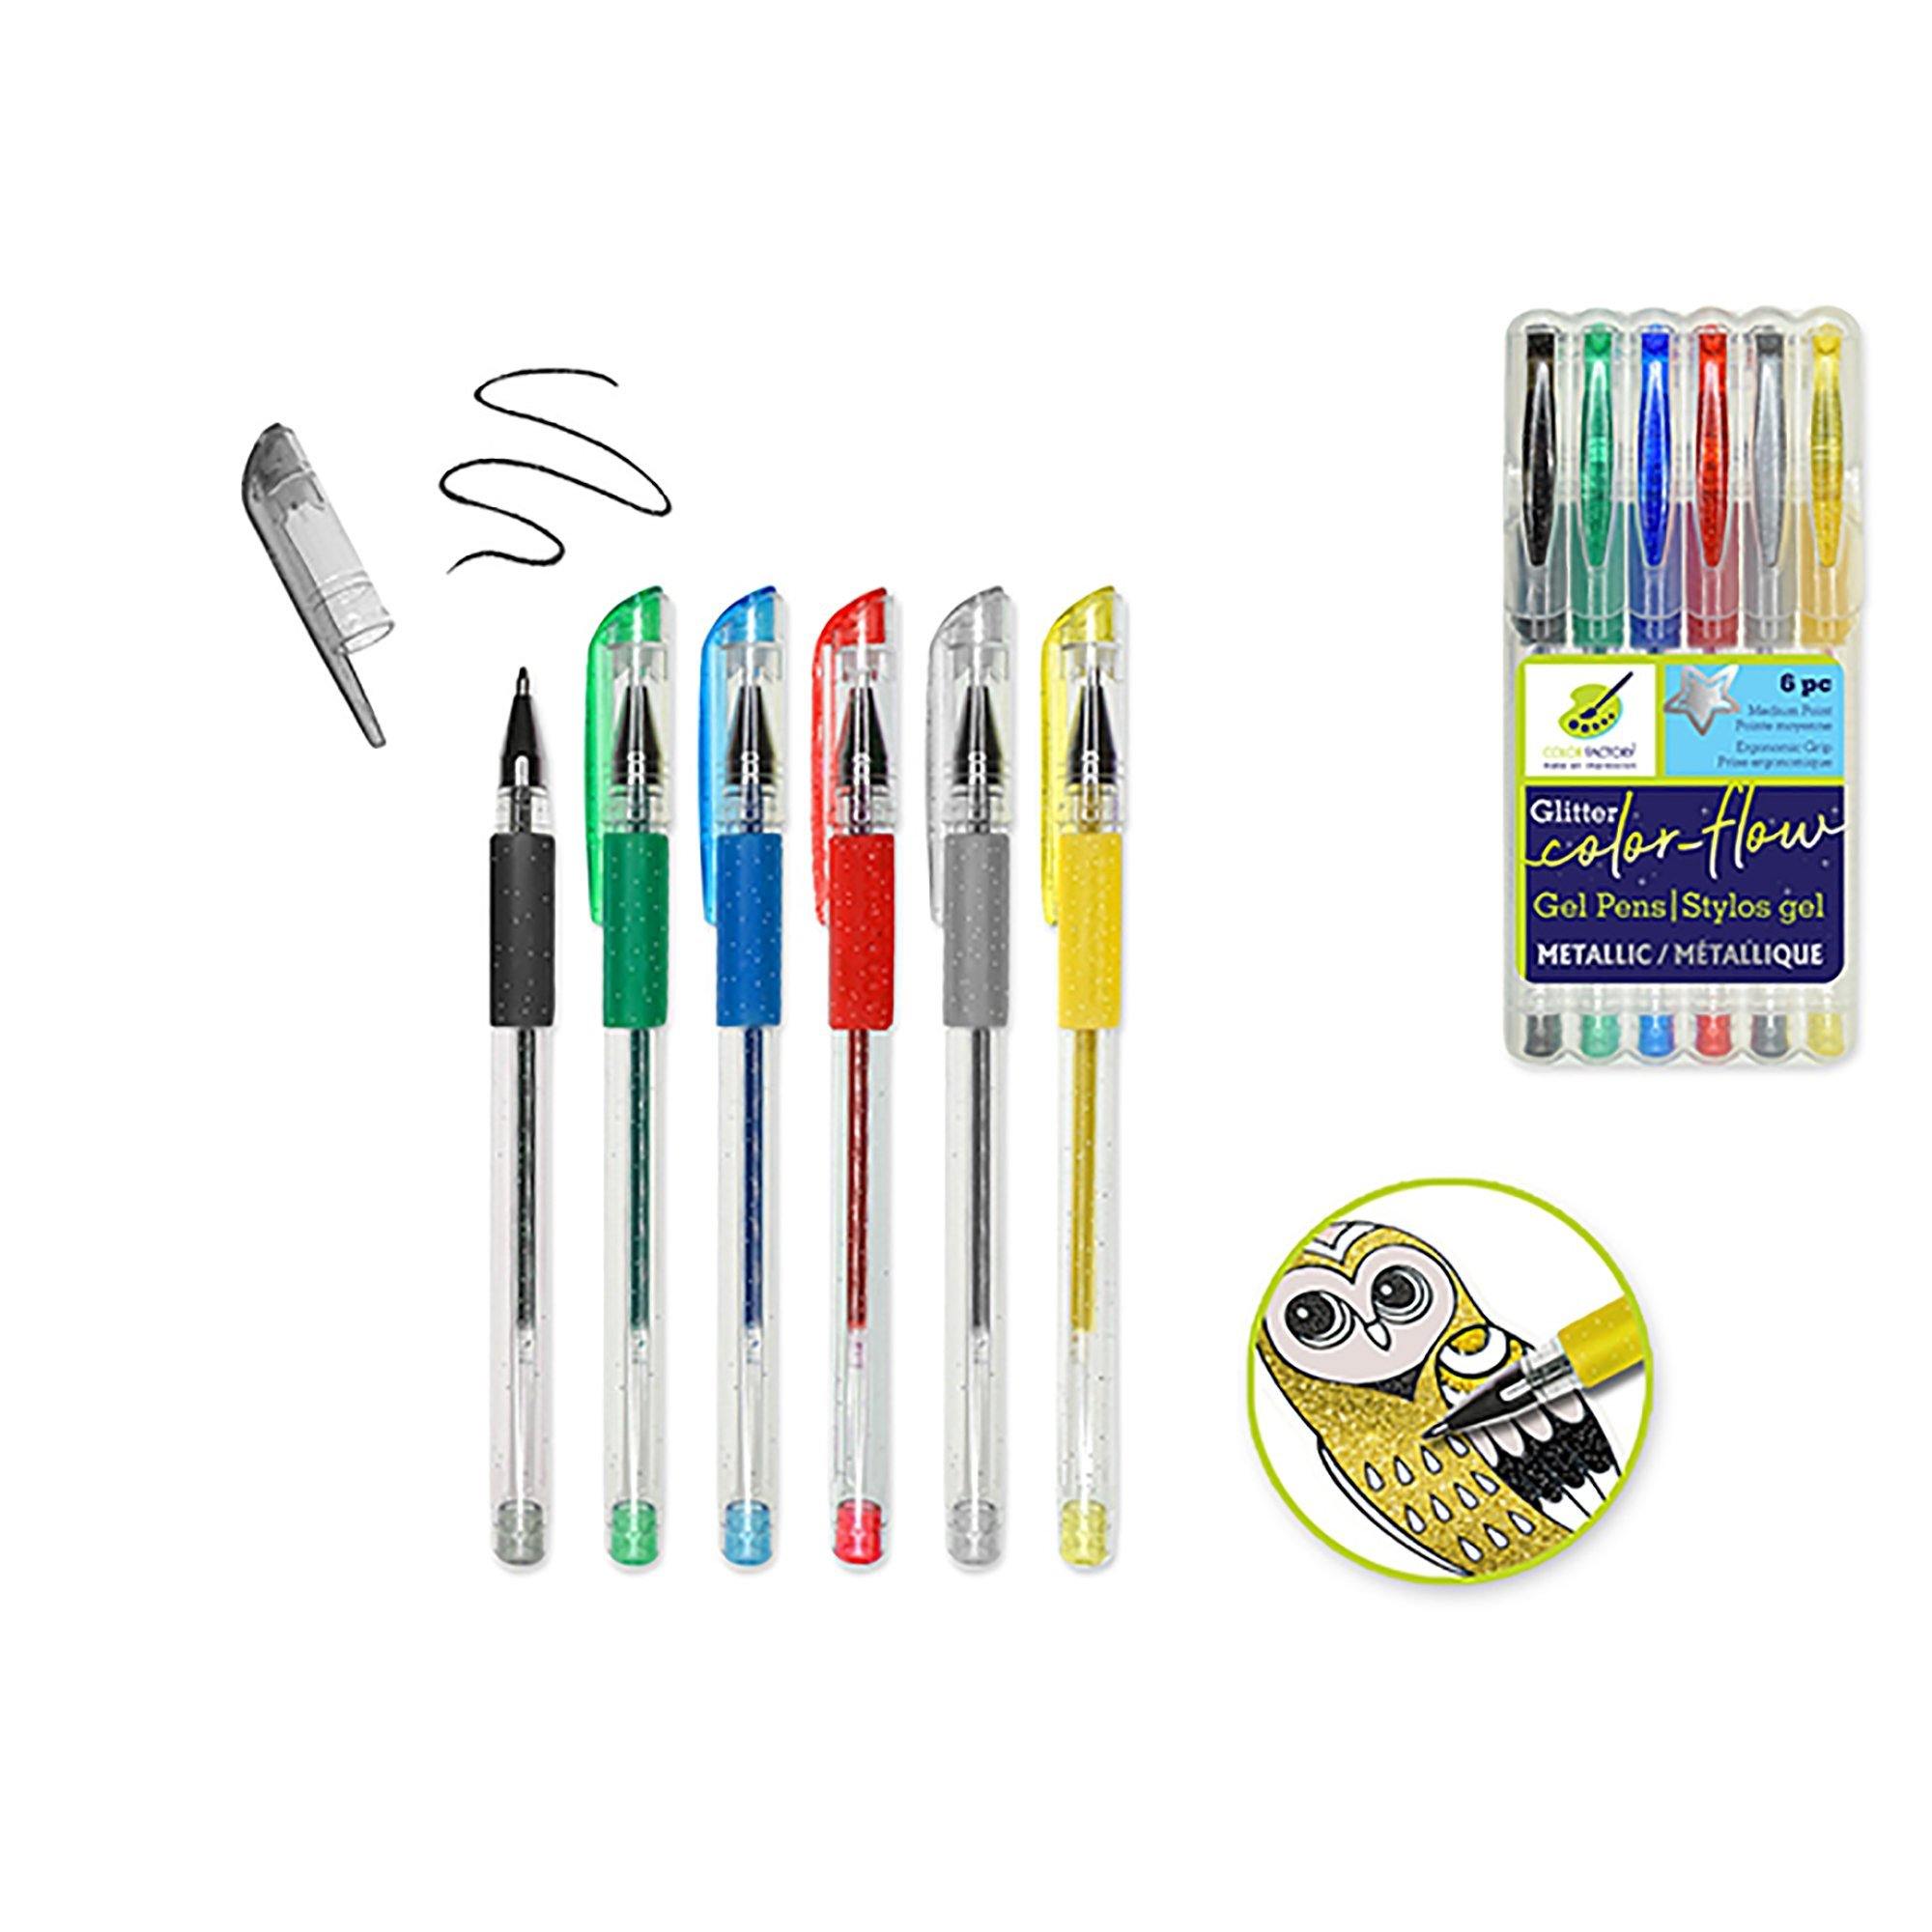 Metallics Color Factory Tool: Color-Flow Glitter Gel Pen 'Living In Color' Premium - Dollar Max Dépôt